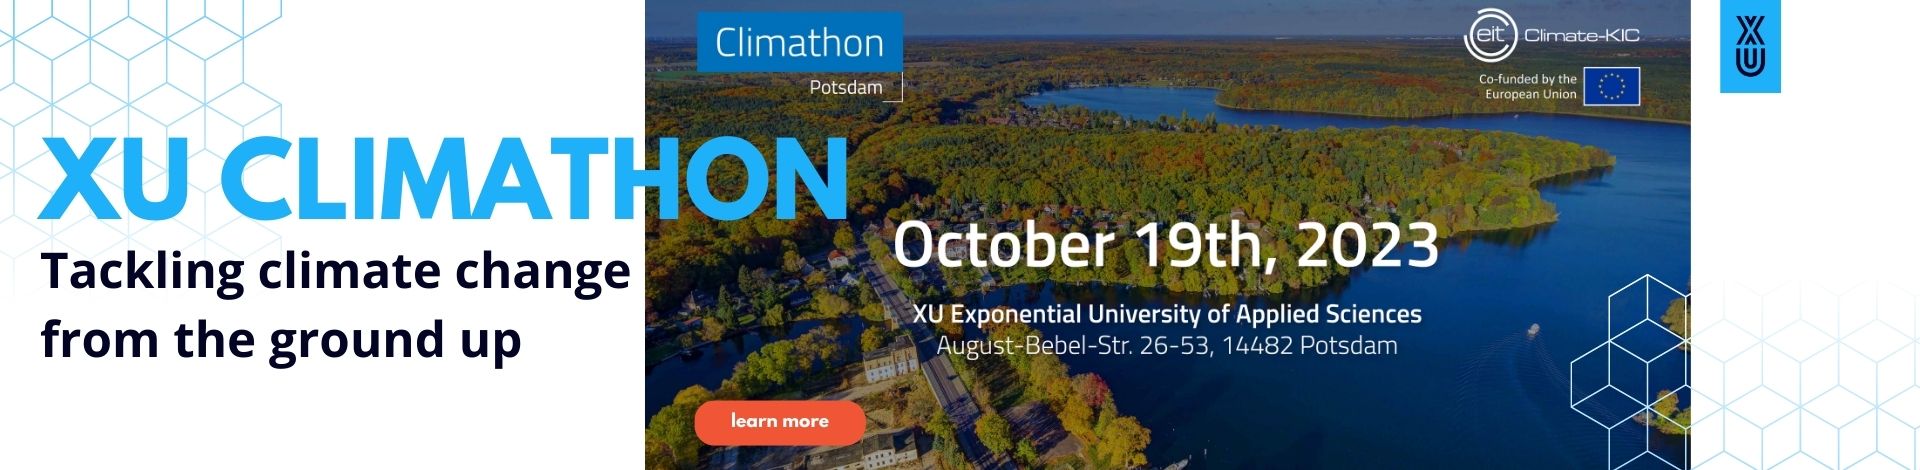 XU Climathon, 19th of October 2023